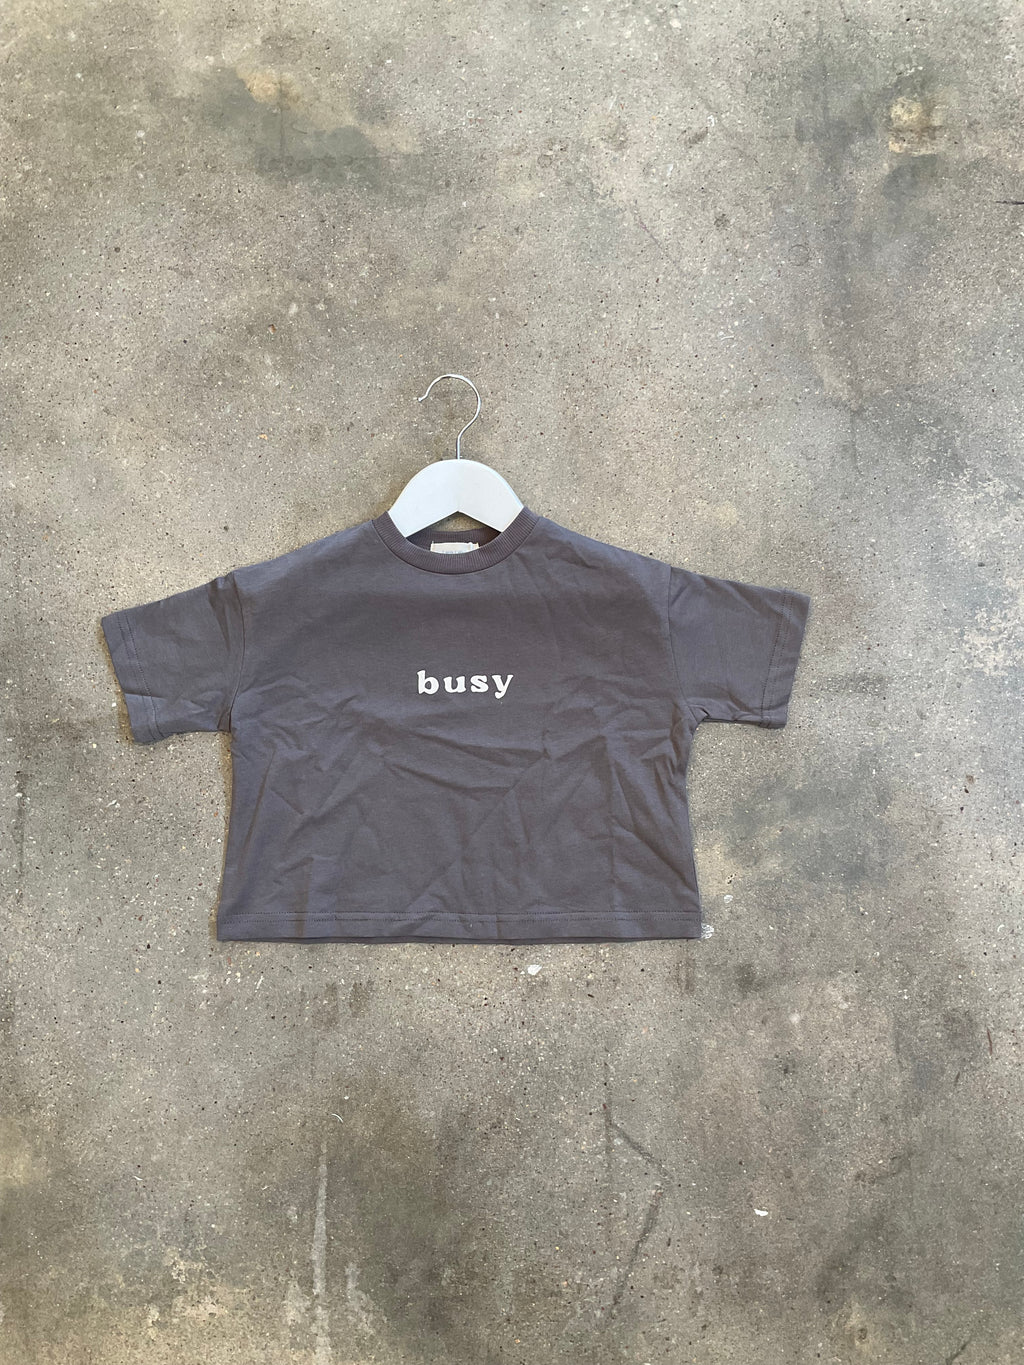 Lenn Label Busy T-shirt